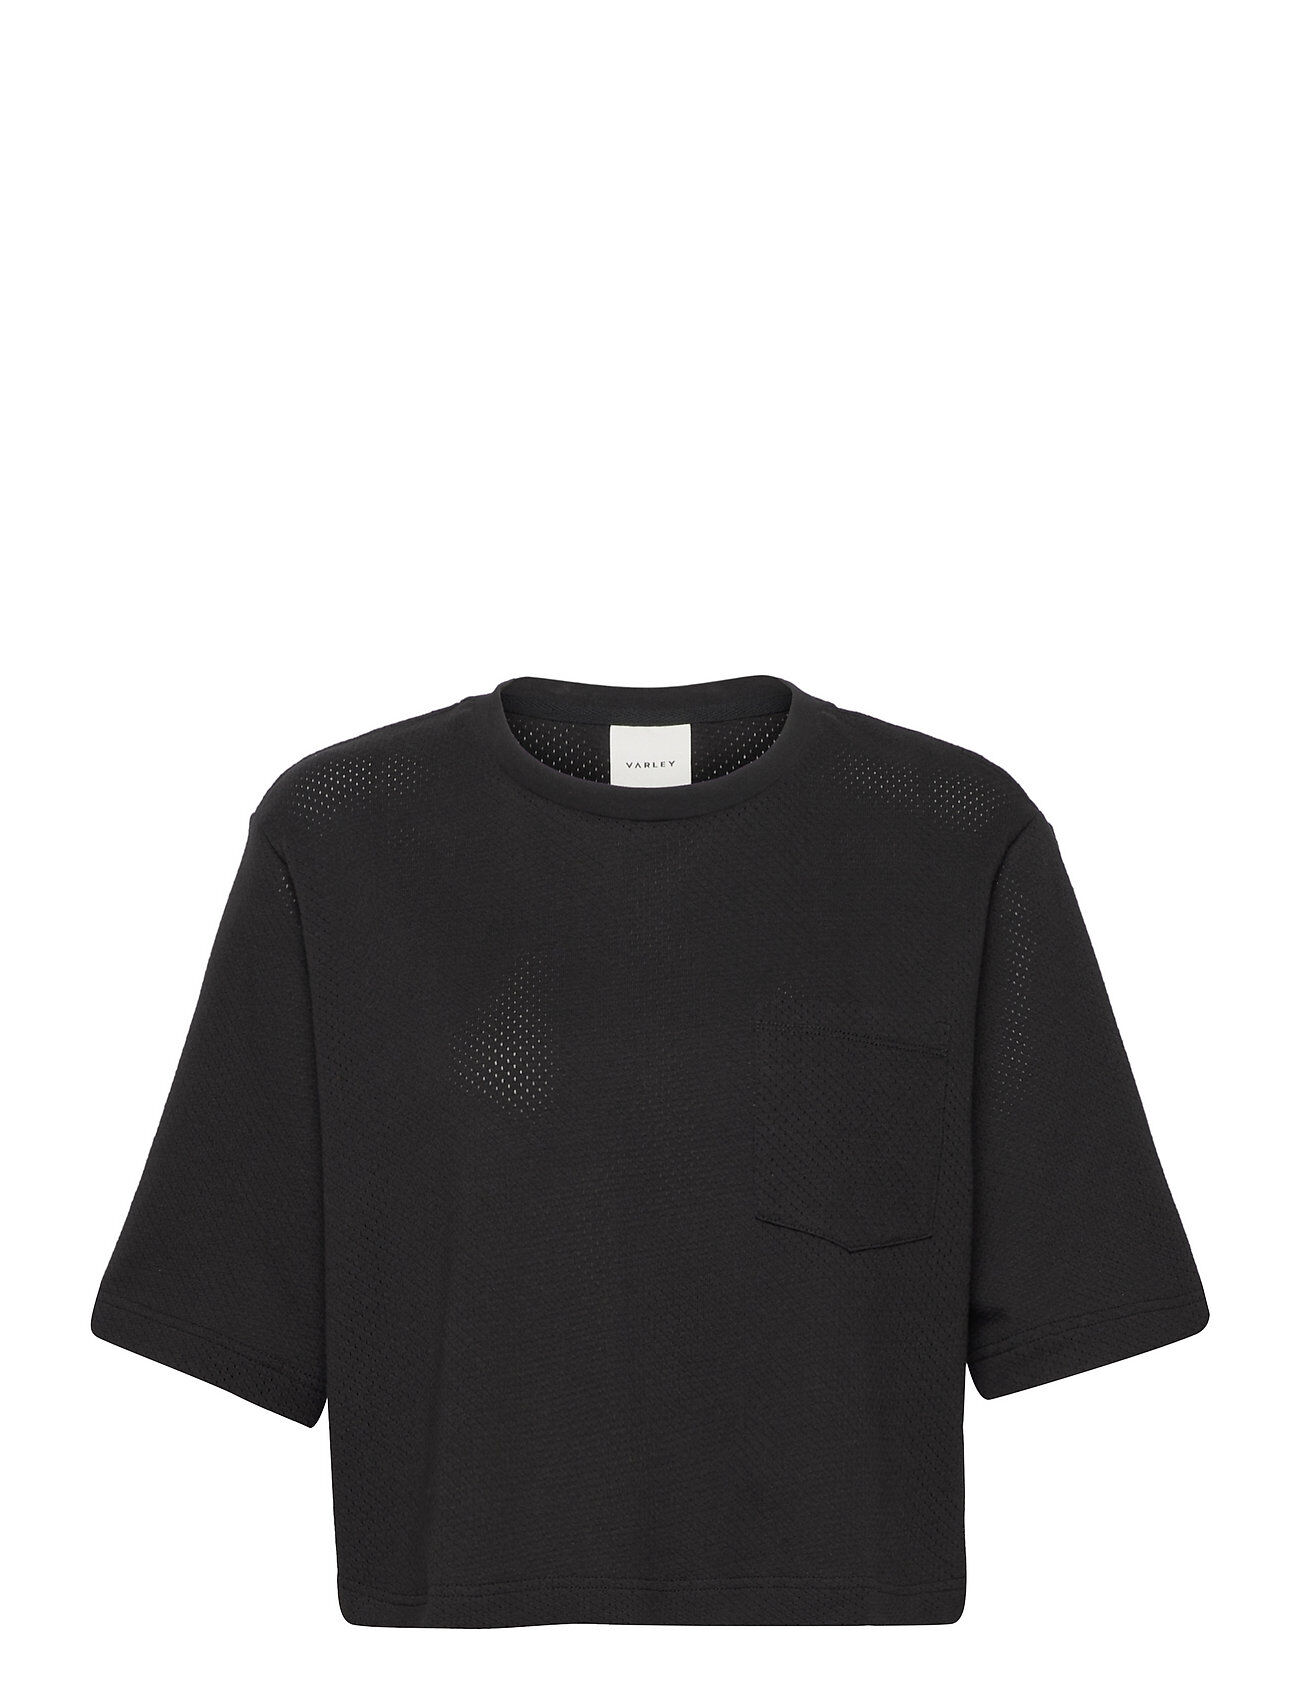 Varley Bexley T-Shirt T-shirts & Tops Short-sleeved Svart Varley